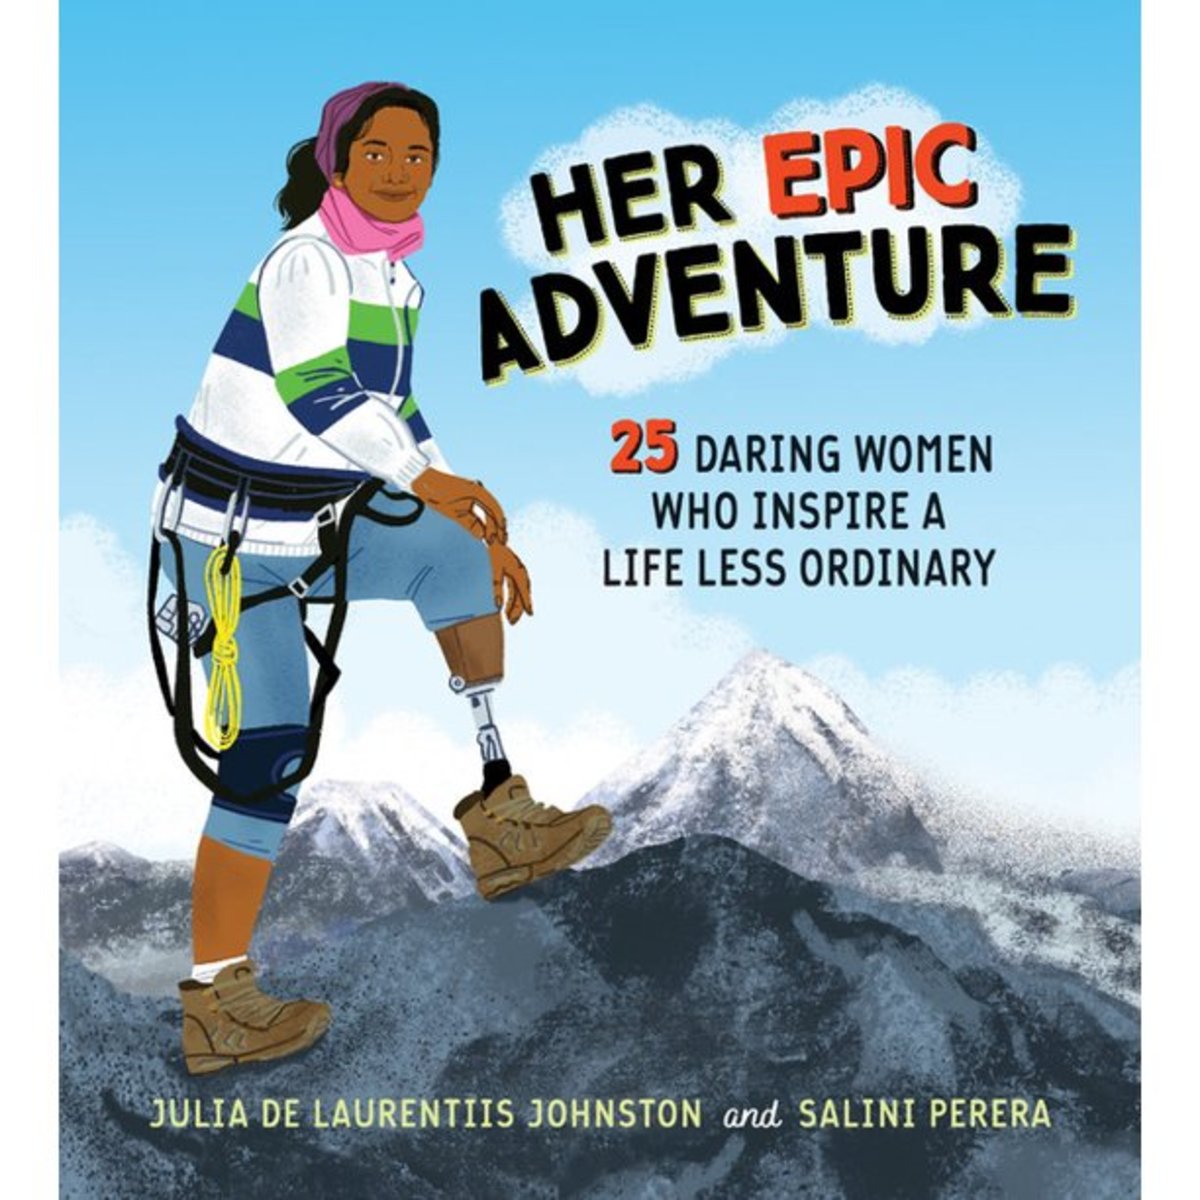 Her Epic Adventure: 25 Daring Women Who Inspire a Life Less Ordinary by Julia de Laurentiis Johnston